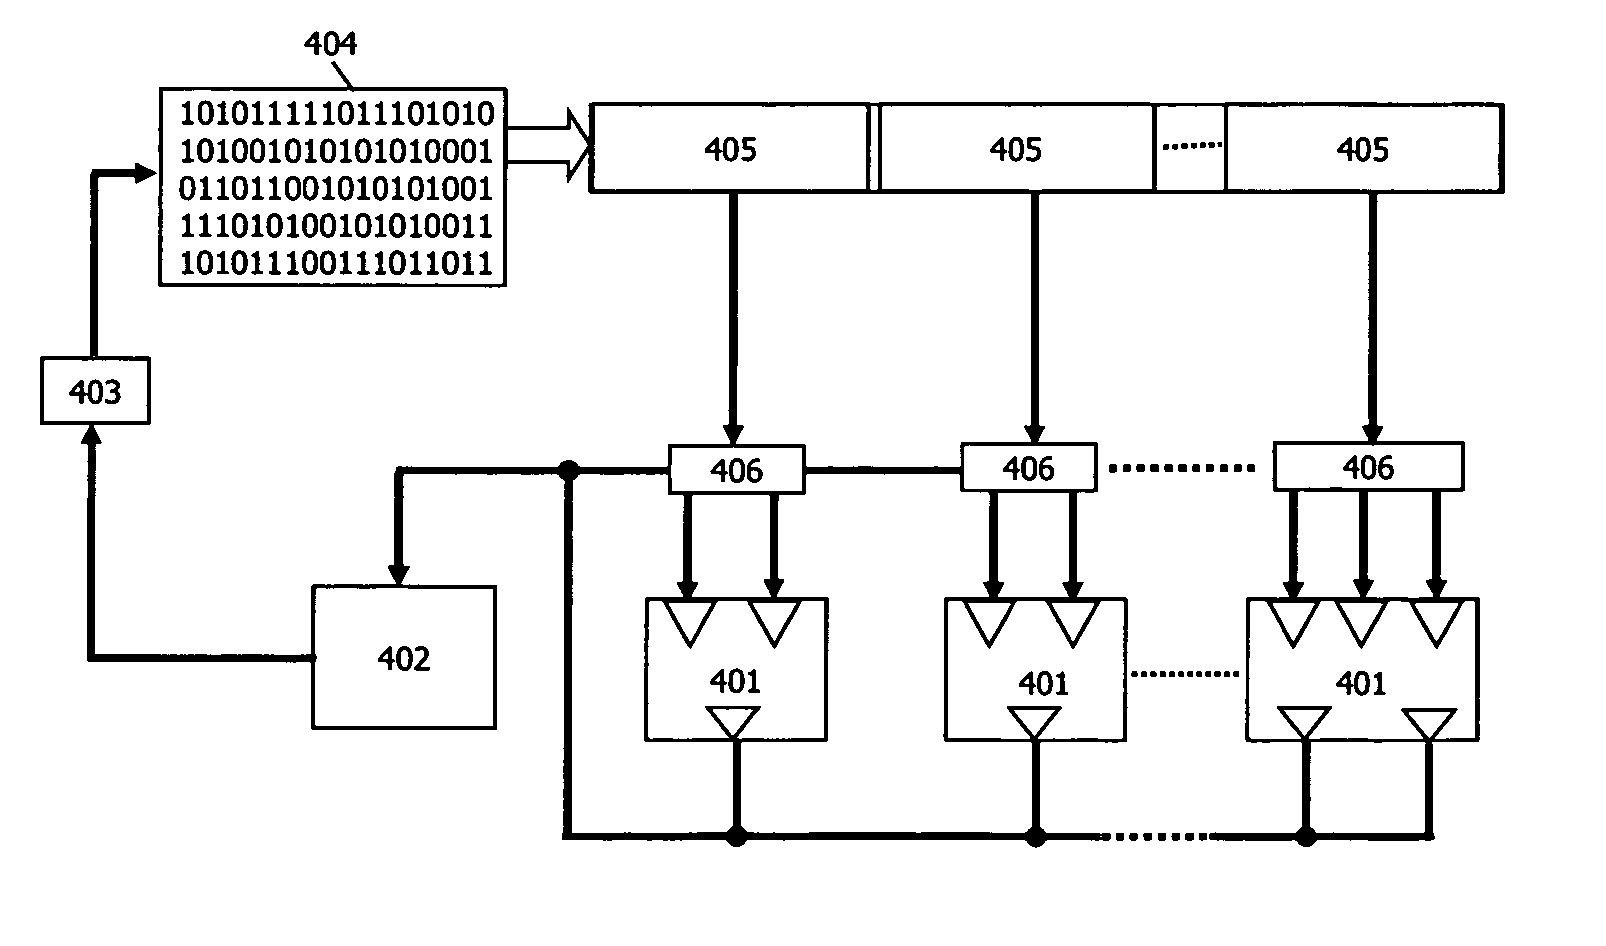 Configurable microprocessor architecture incorporating direct execution unit connectivity